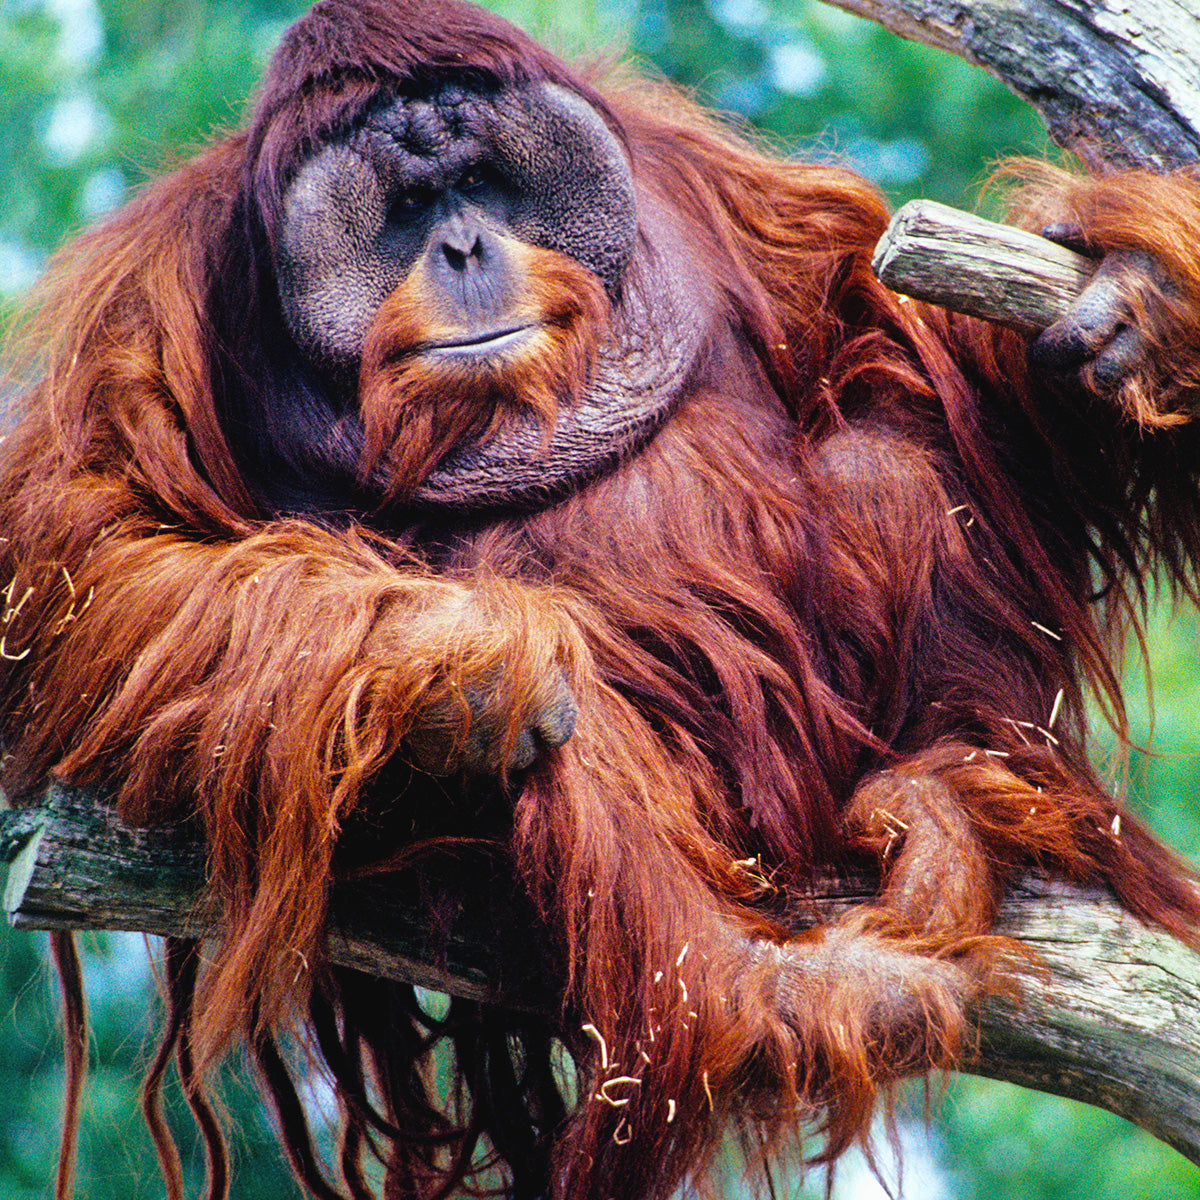 Orangutan adoption card - WWF-Canada